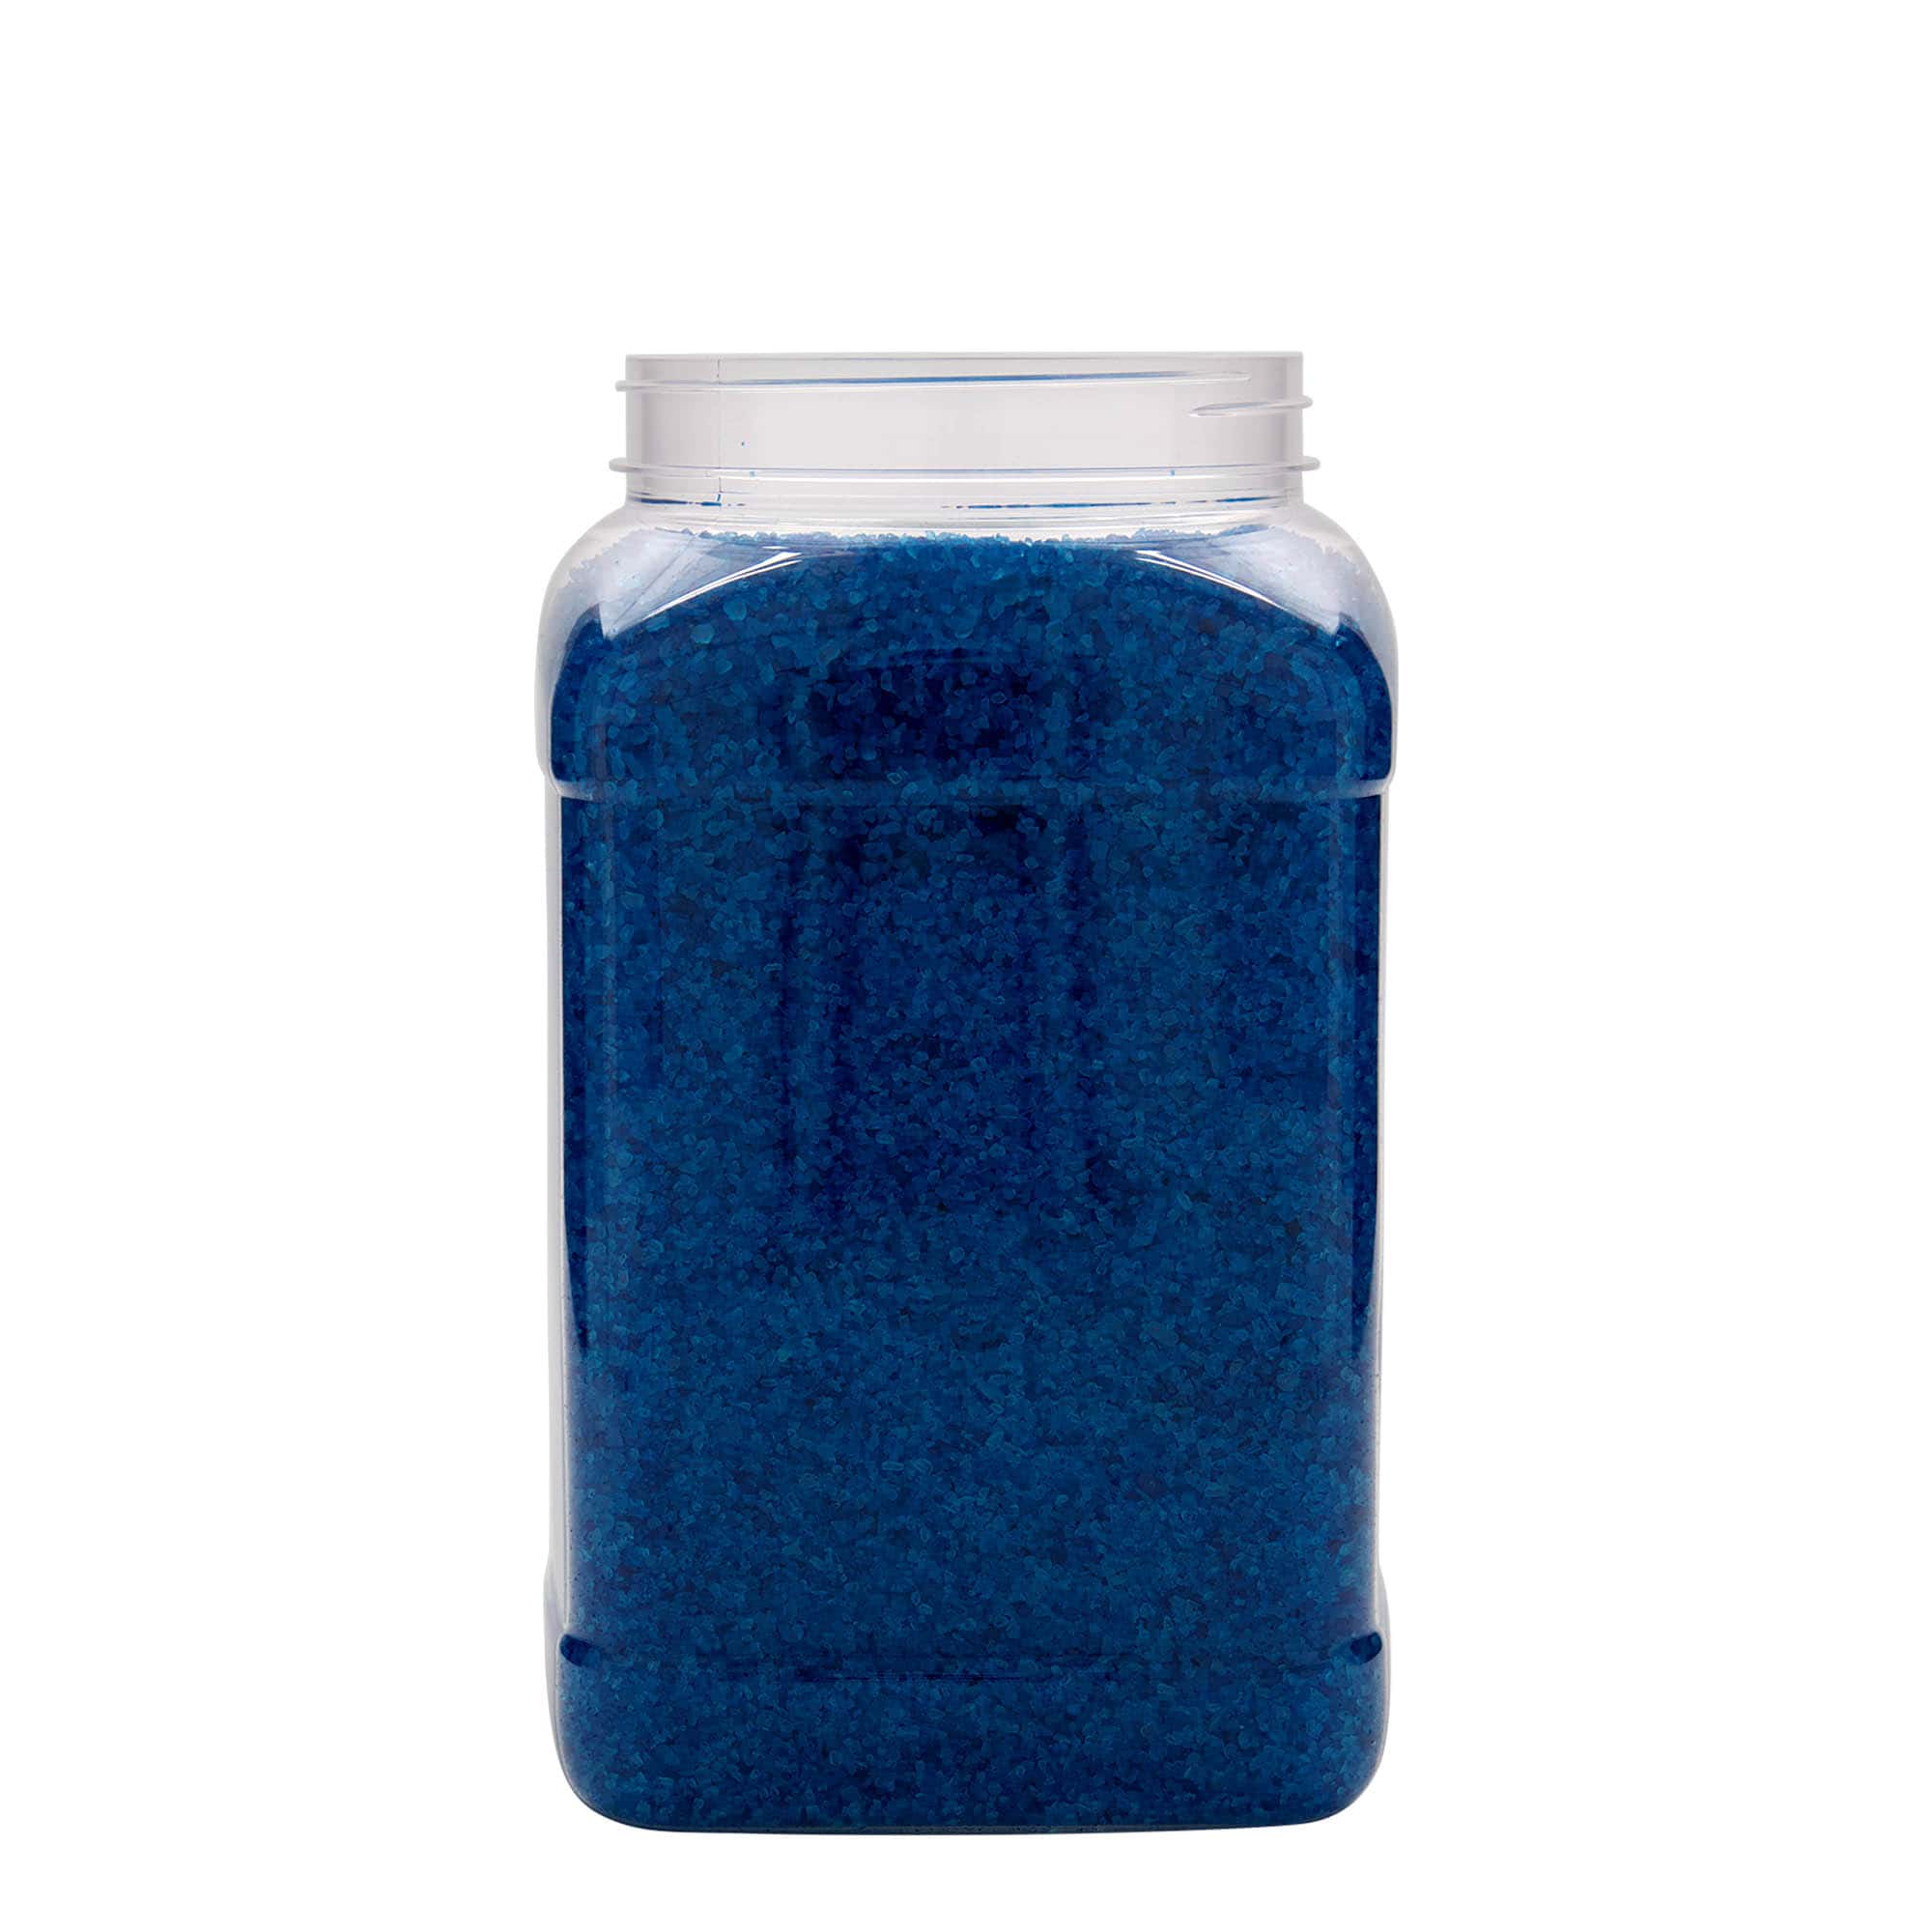 3,000 ml PET jar 'Dana', square, plastic, closure: 110/400